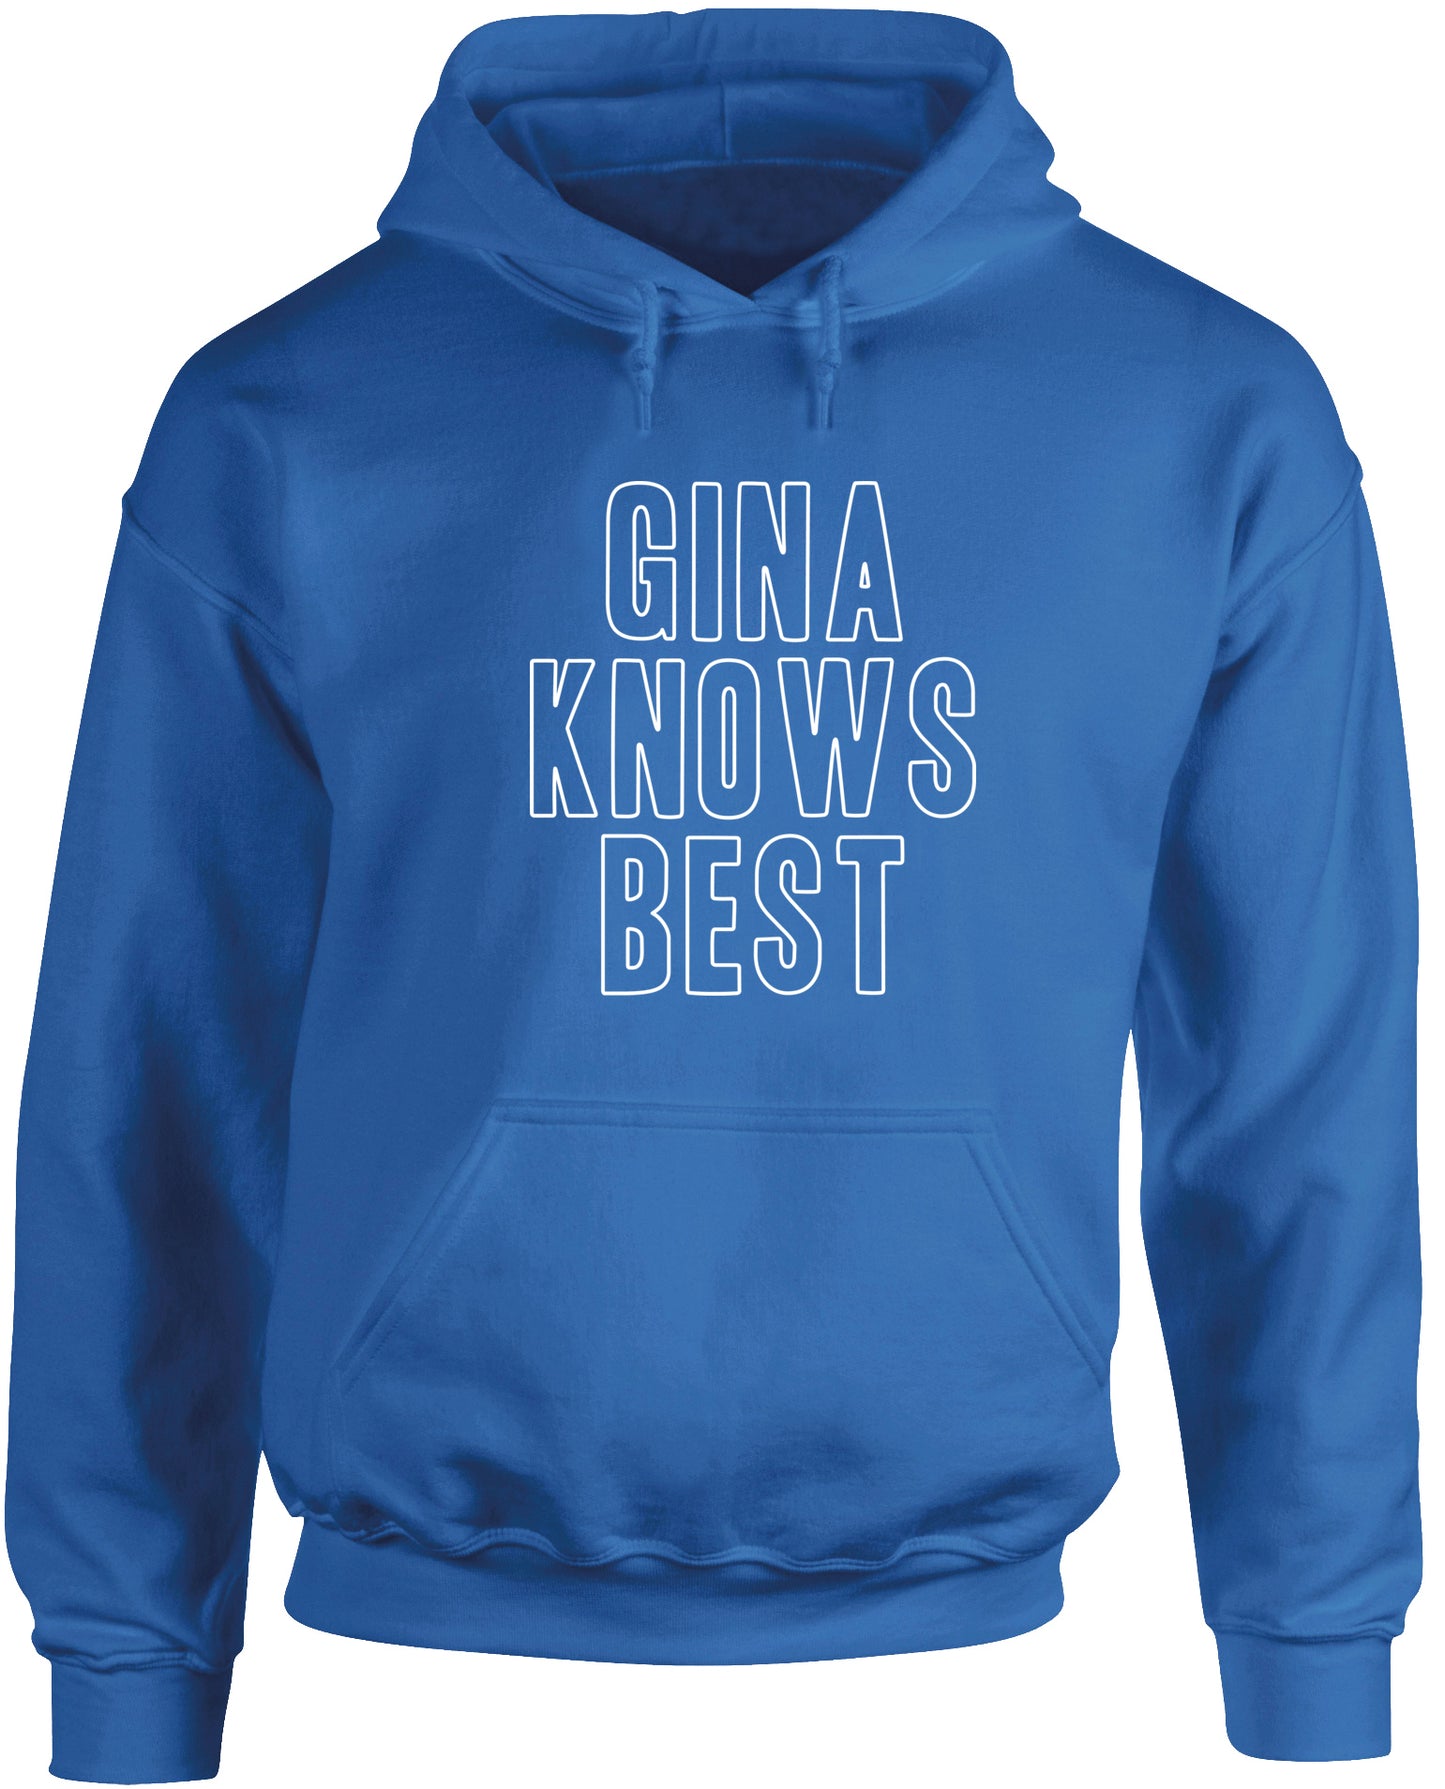 Gina knows best unisex Hoodie hooded top